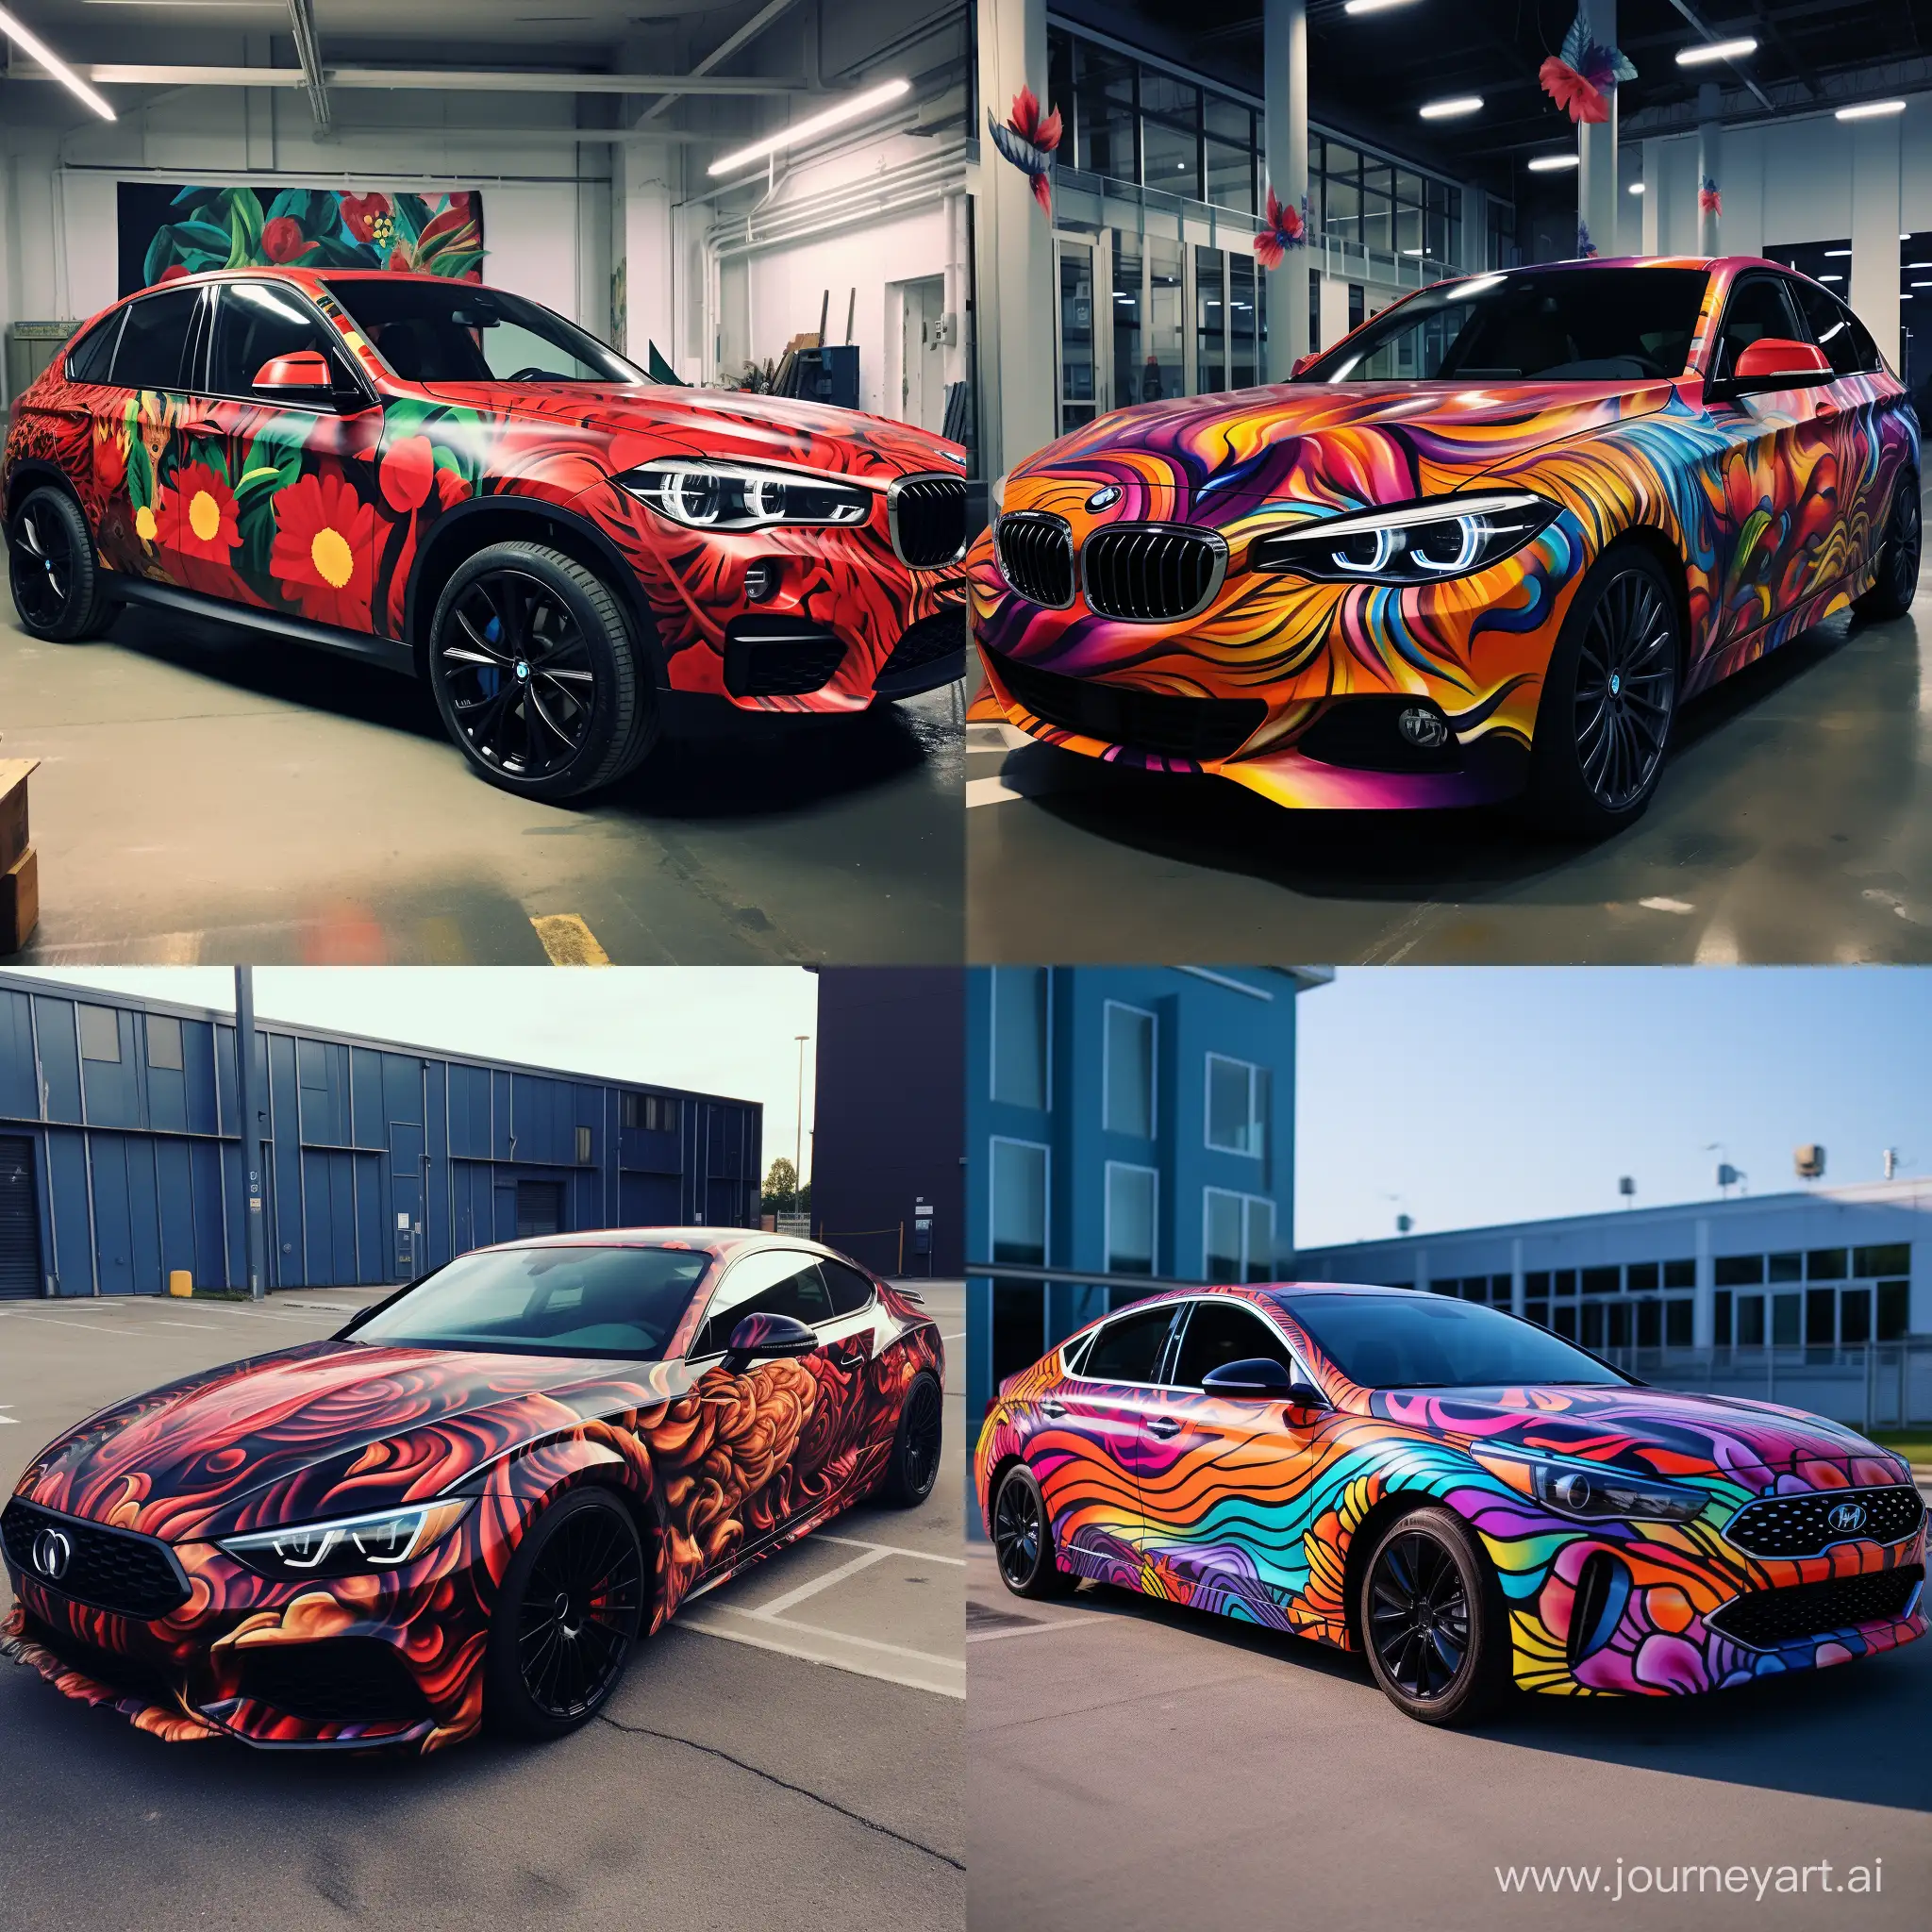 Vibrant-Custom-Car-Wraps-Displaying-Artistic-Flair